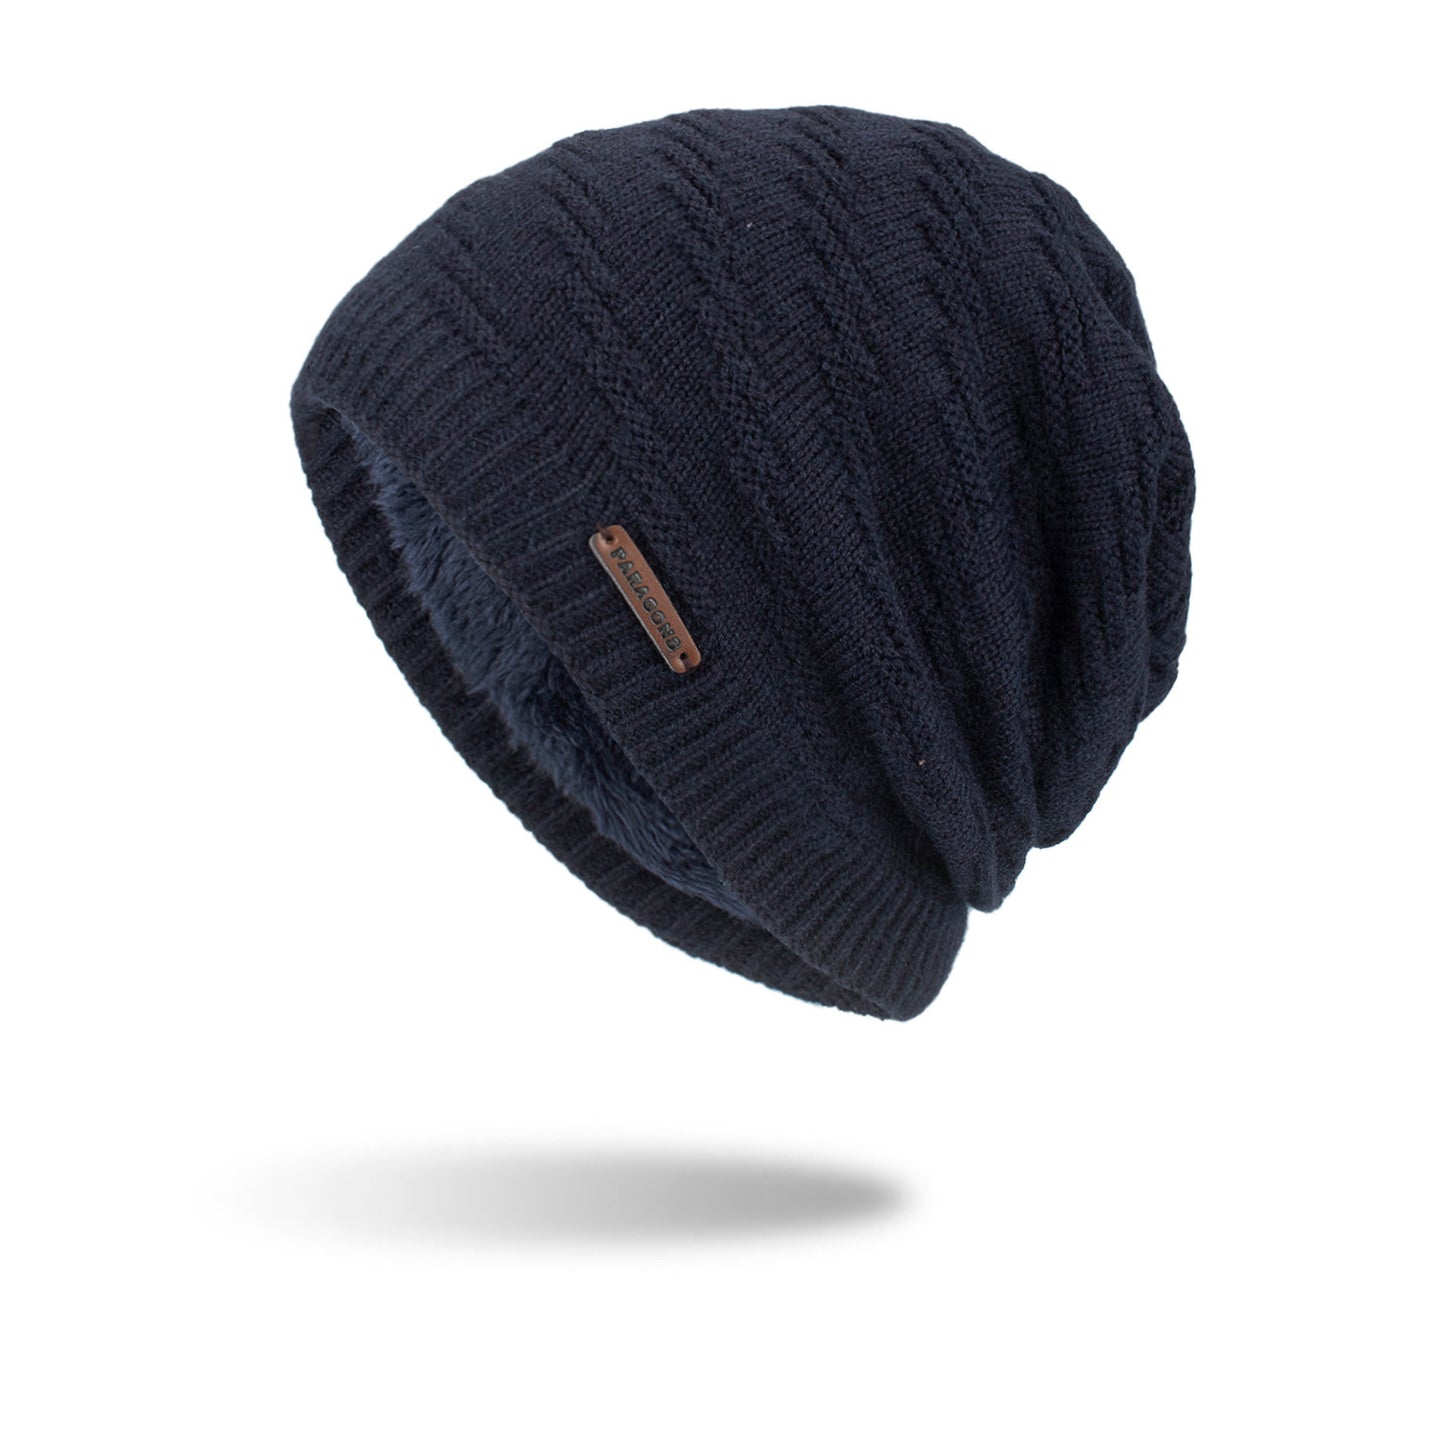  Military Matter Knitted Winter Fleece Warm Head Men's Outdoor Hat | The Best CS Tactical Clothing Store